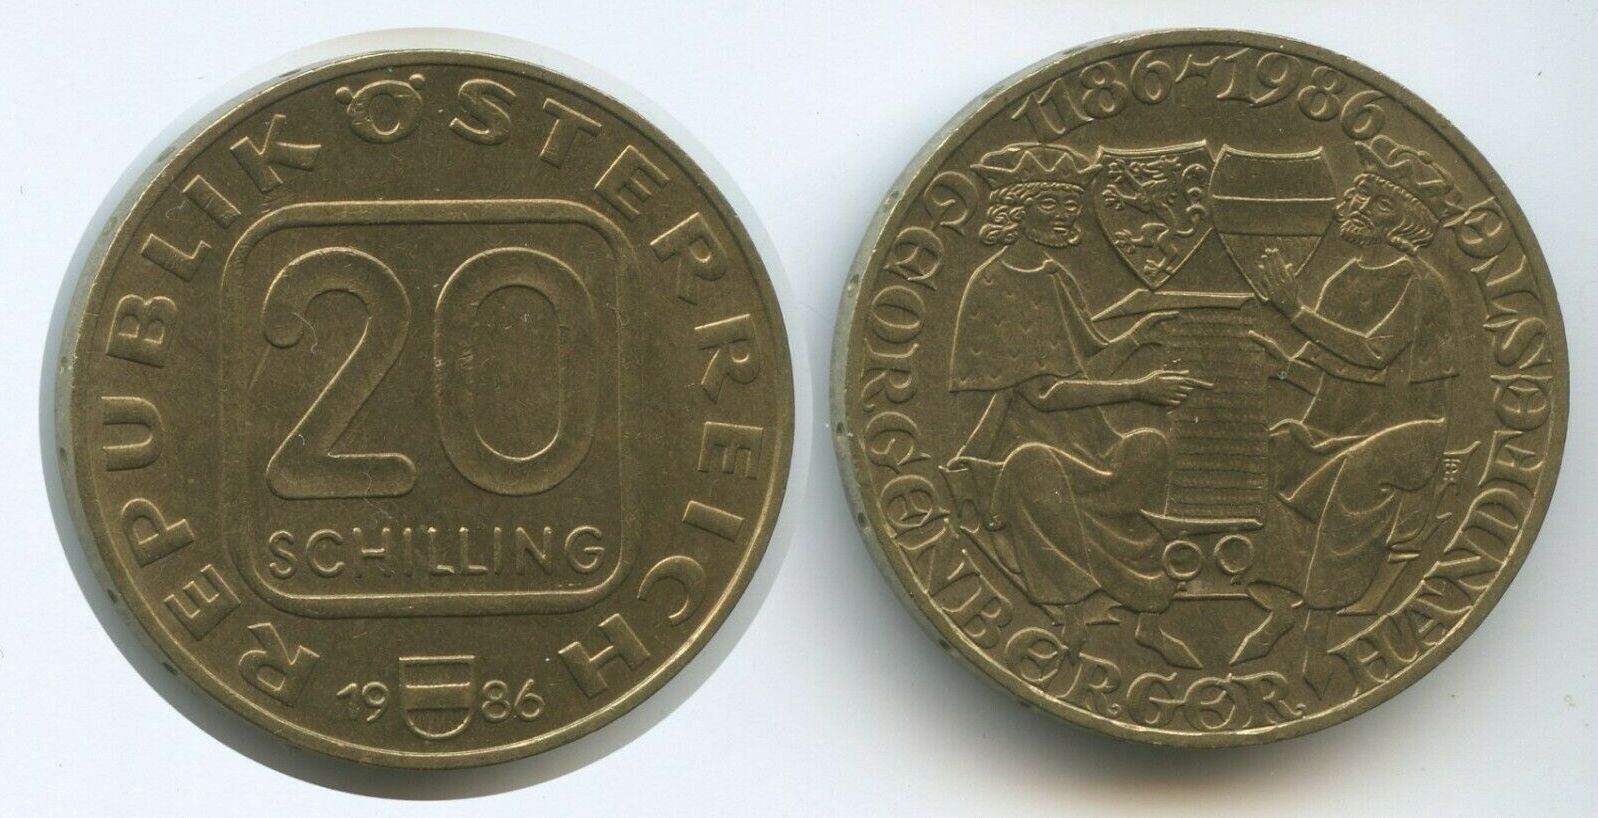 Austria 20 Schilling BANKNOTE 1986 UNC 